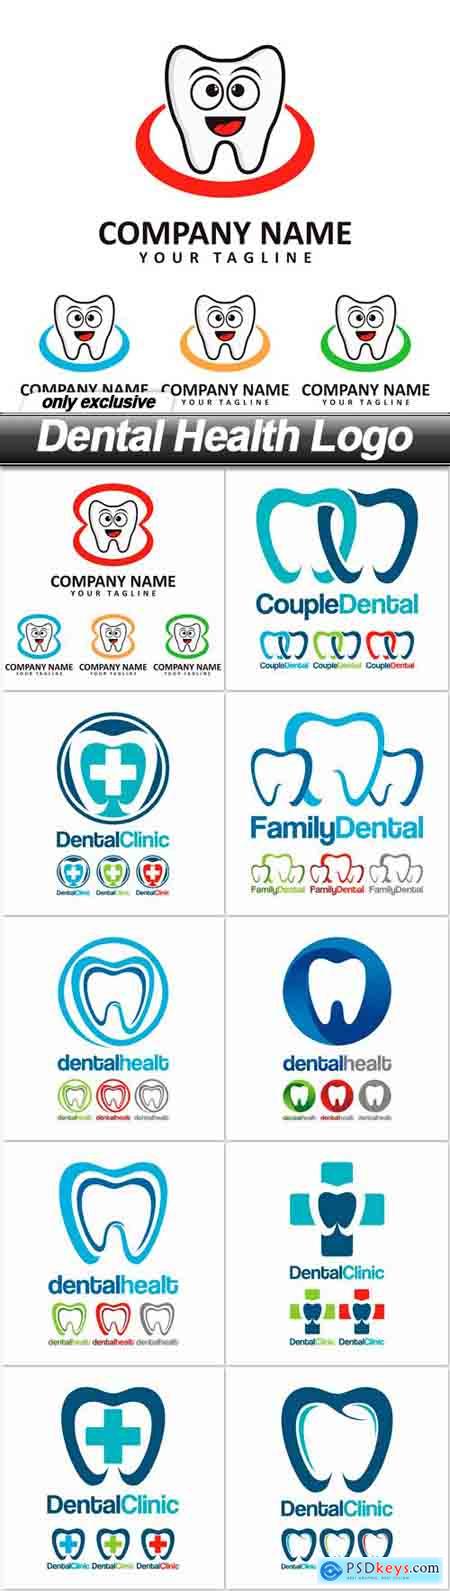 Dental Health Logo - 11 EPS